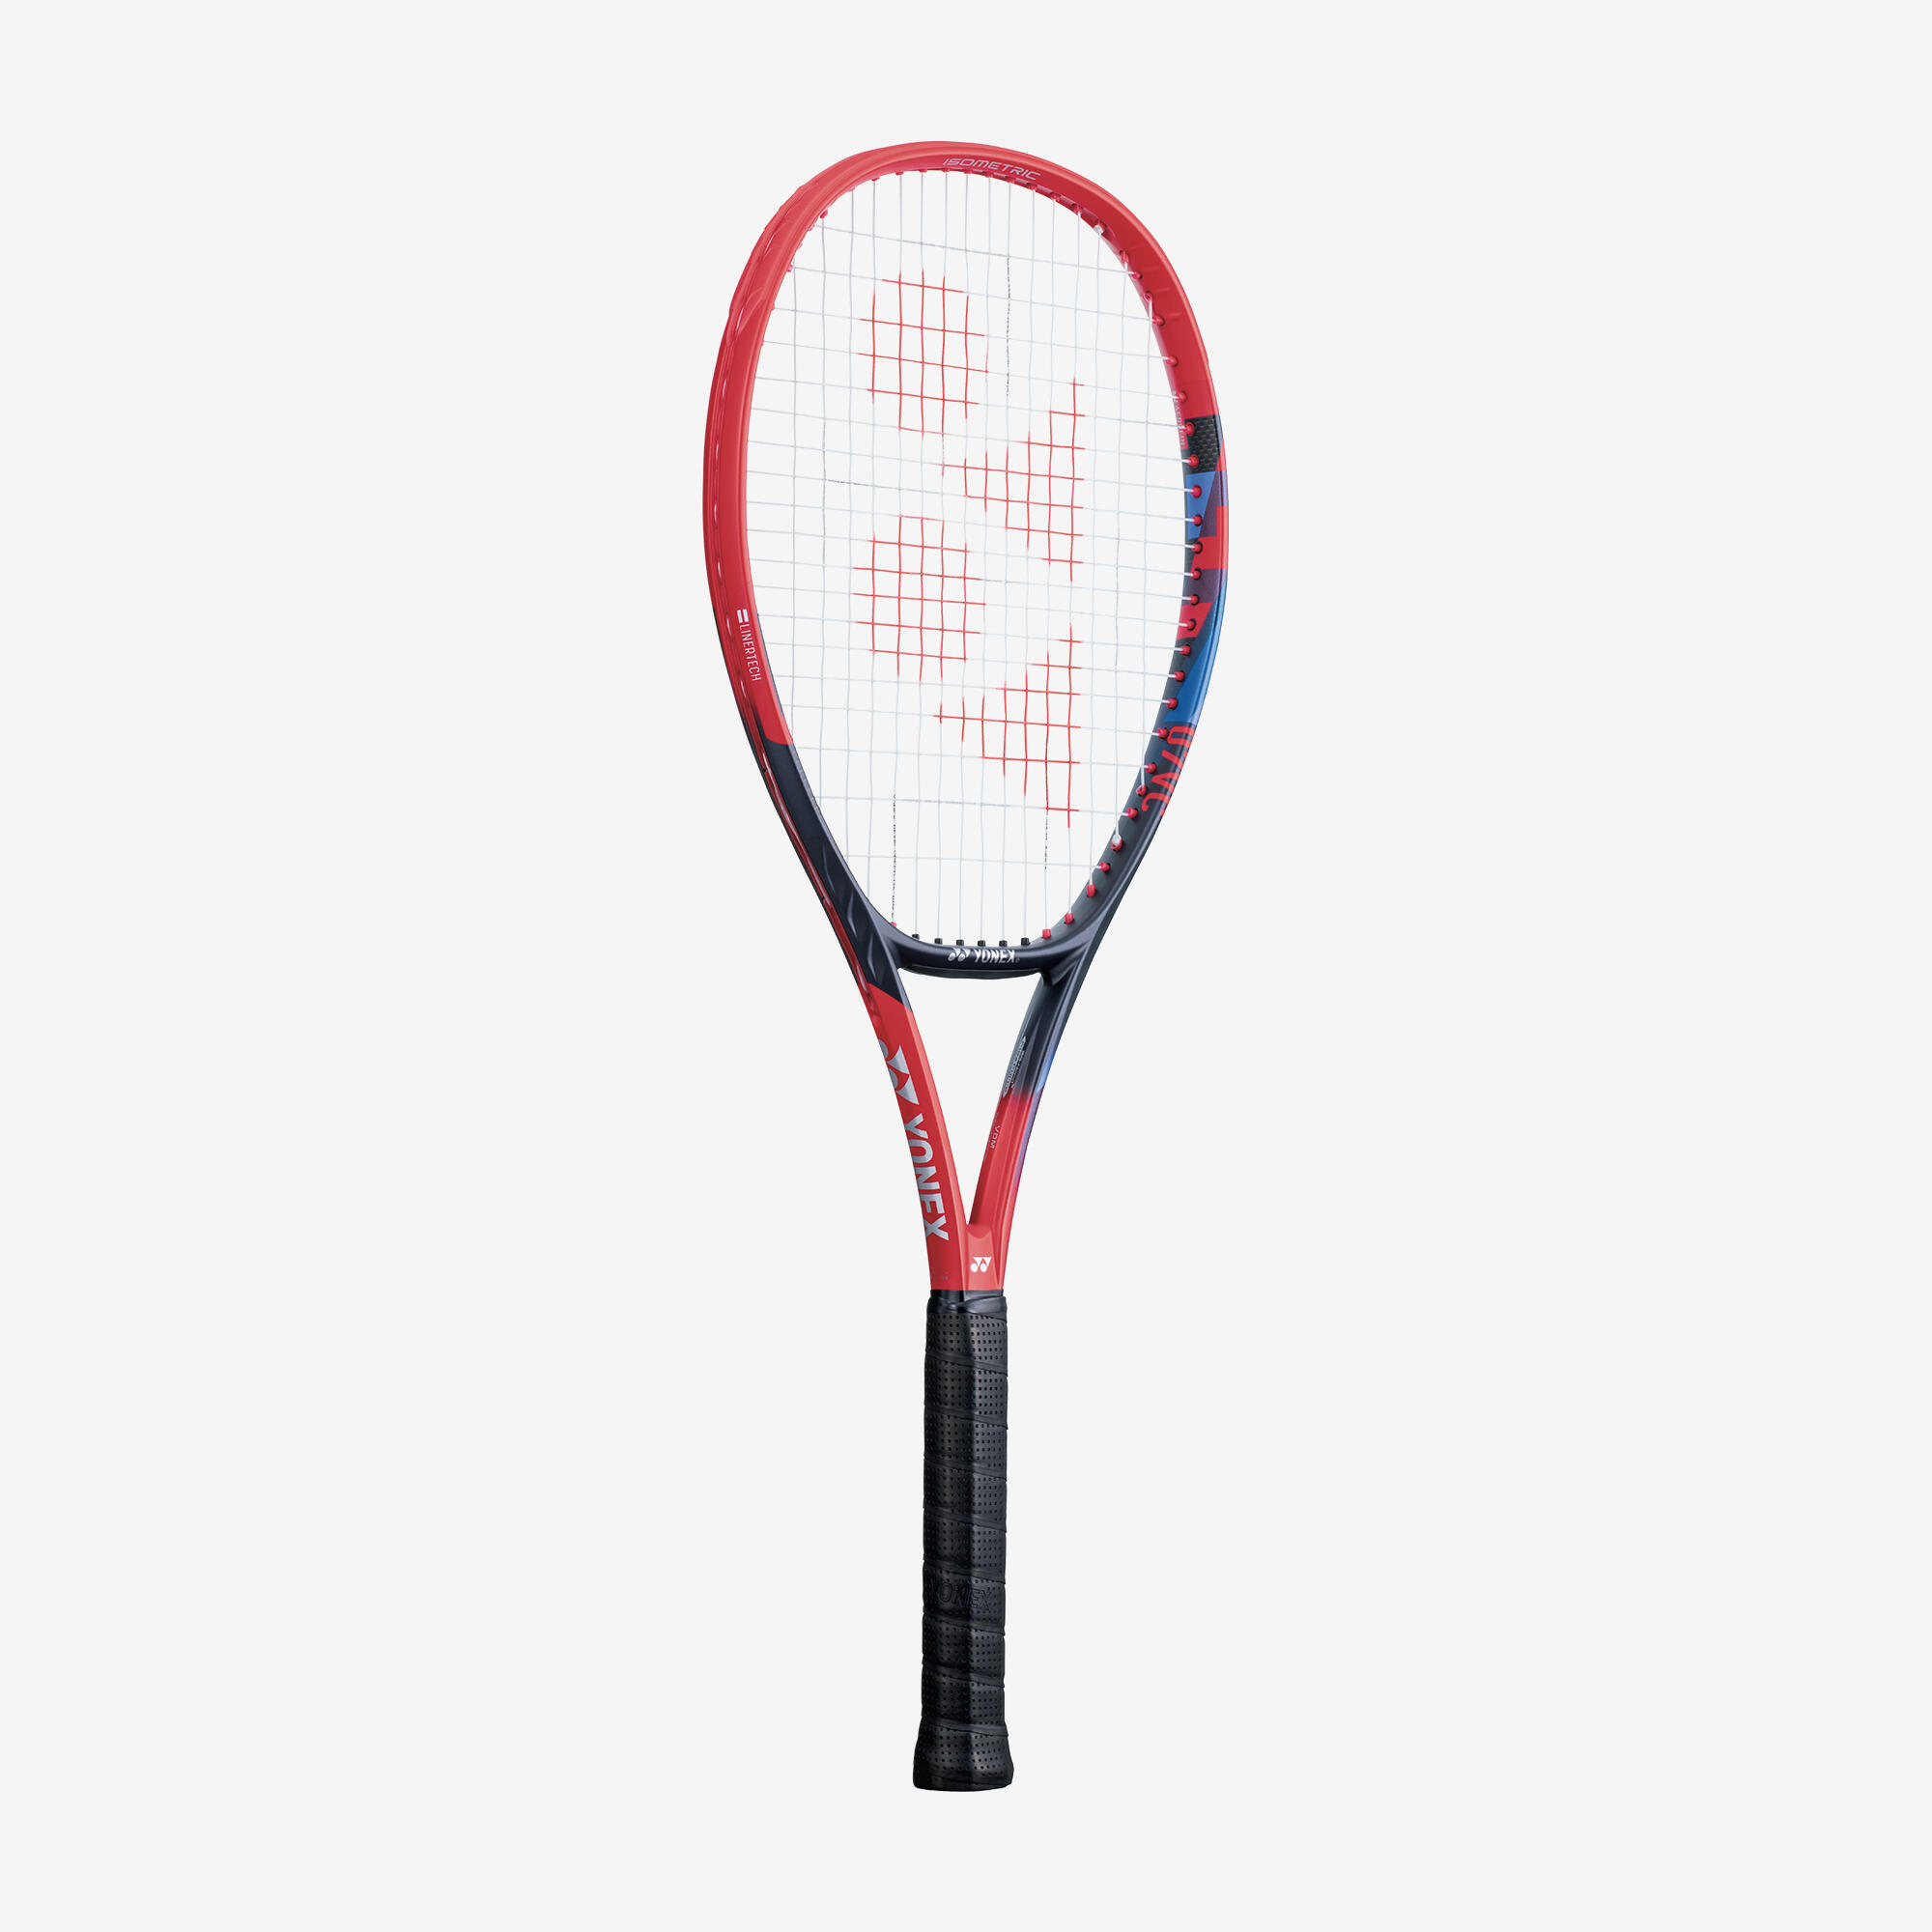 YONEX Adult Tennis Racket VCore 100 300g - Red